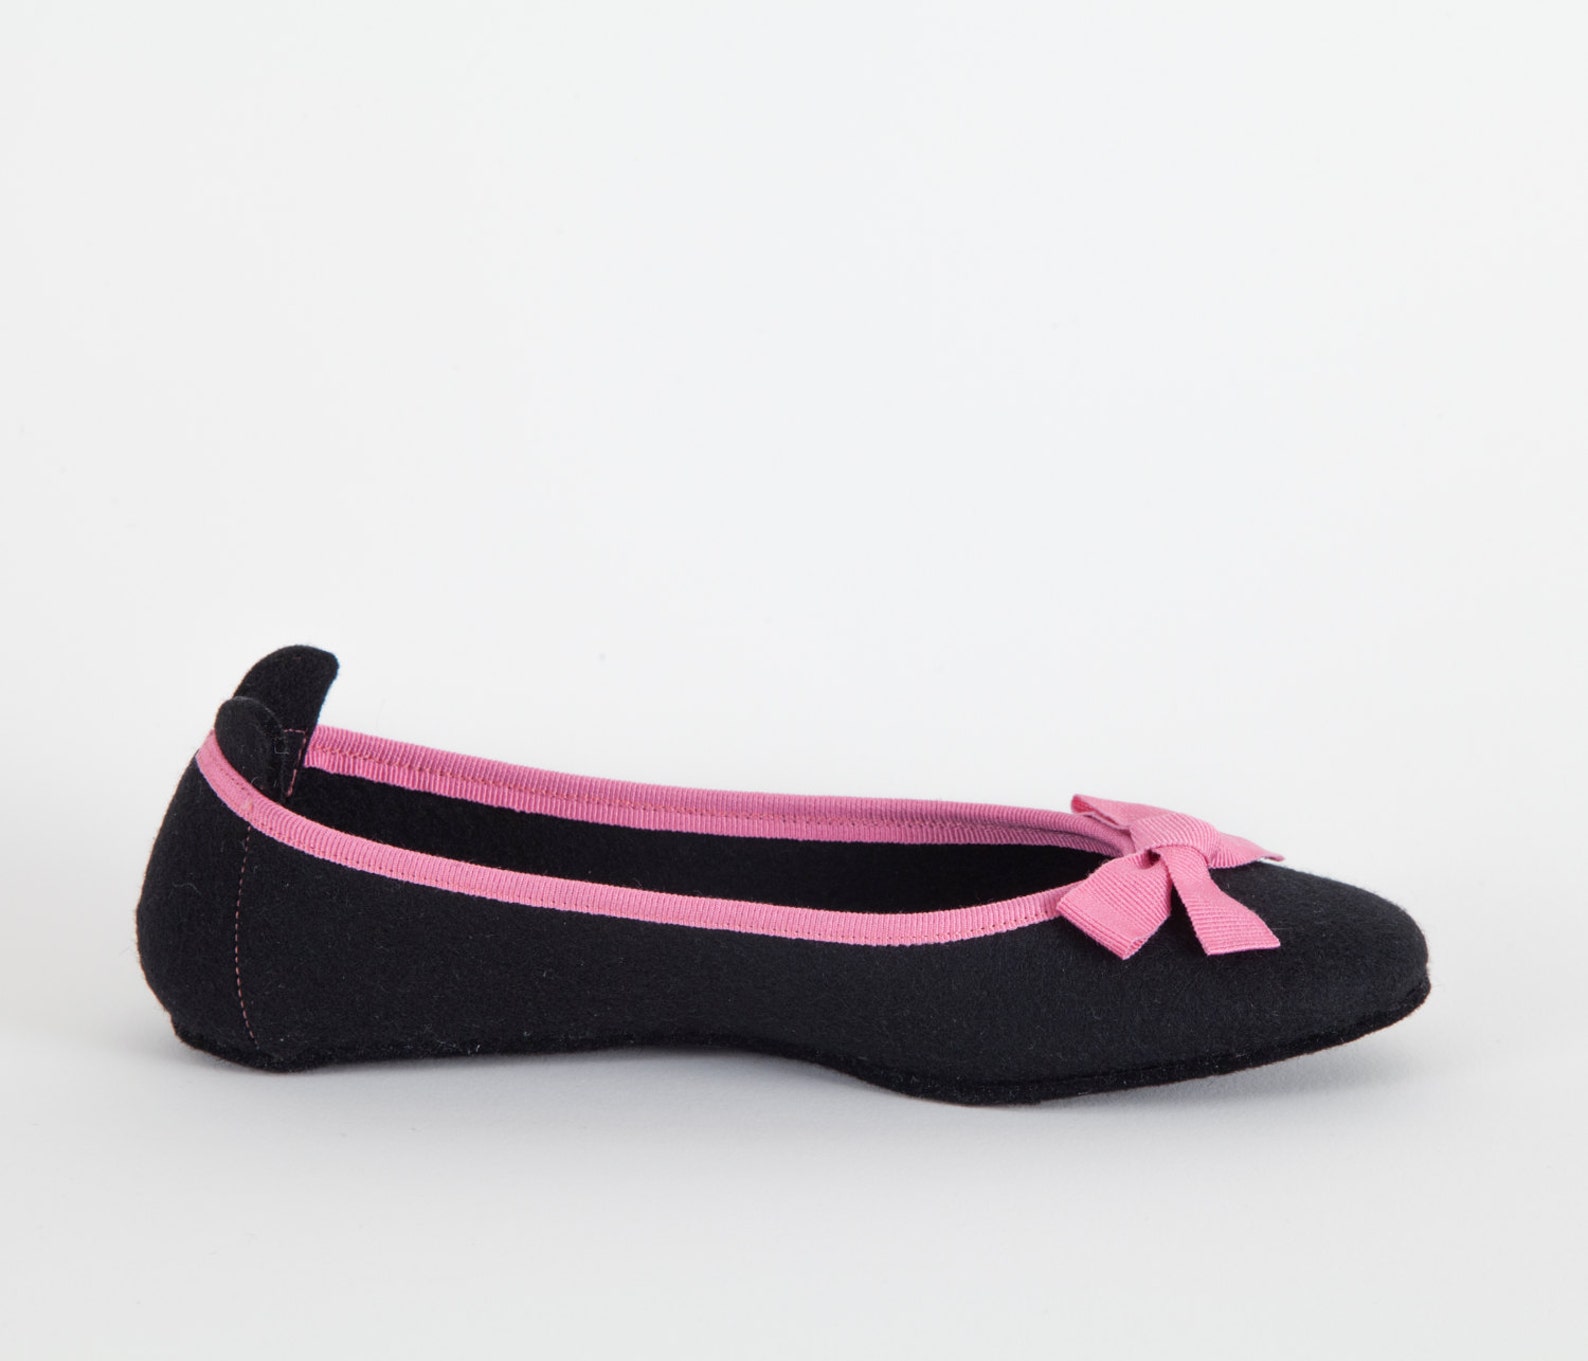 women's slippers- black ballet flat -merino wool felt- handmade in italy- grosgrain ribbon & bow- size eu 37